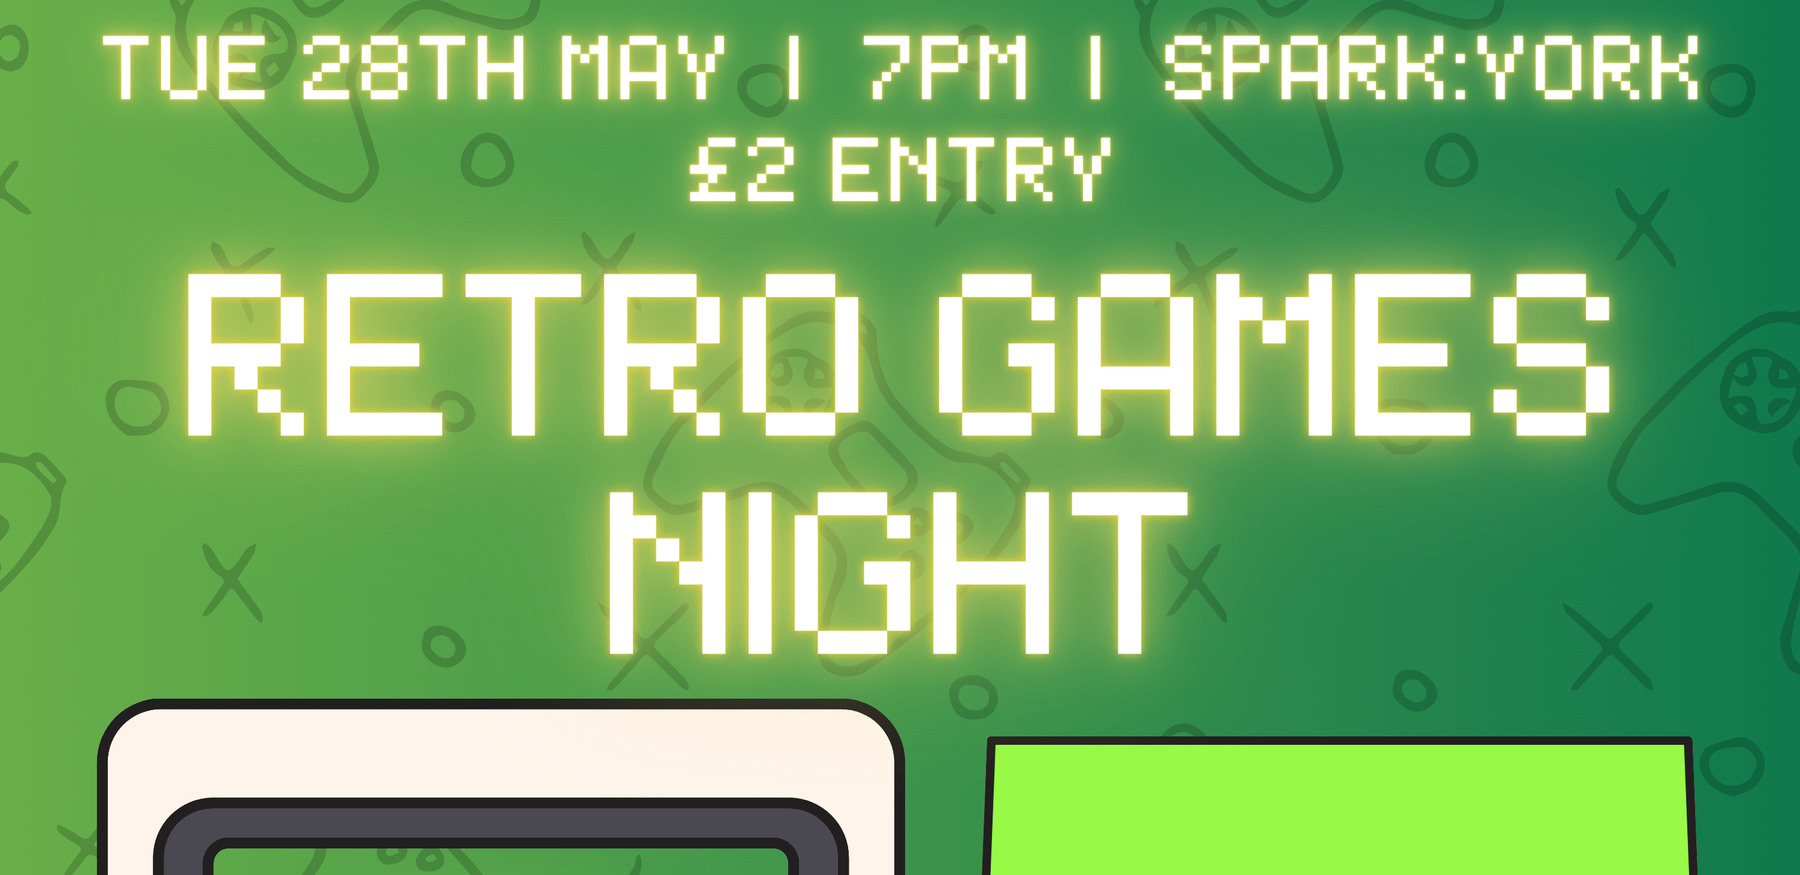 RETRO GAMES NIGHT banner